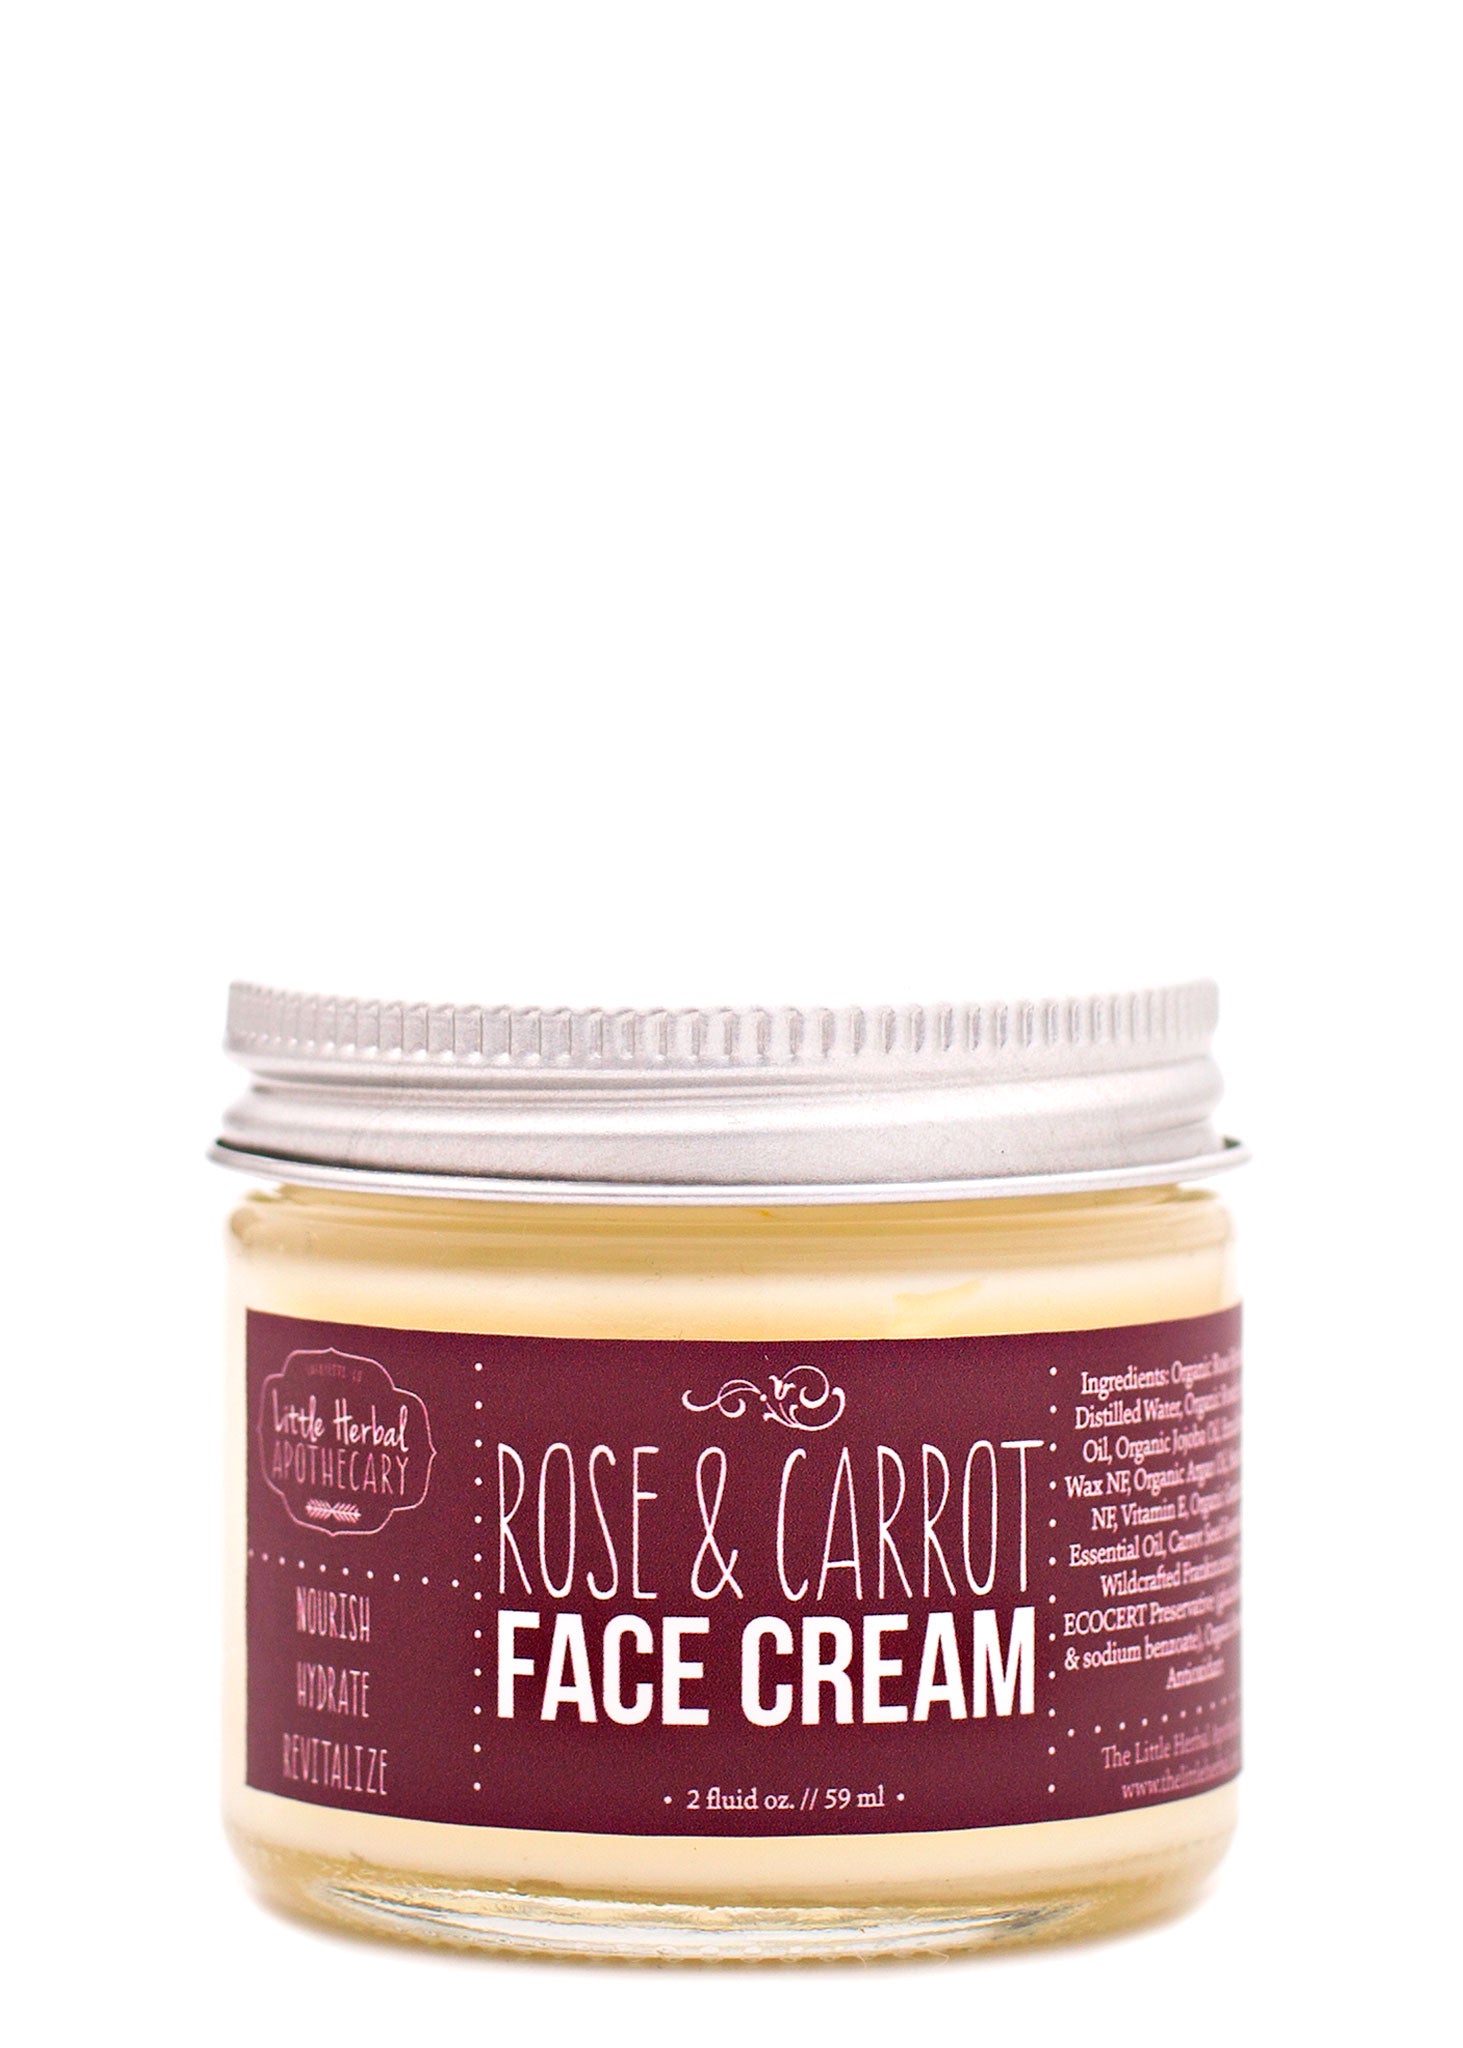 Rose & Carrot Face Cream